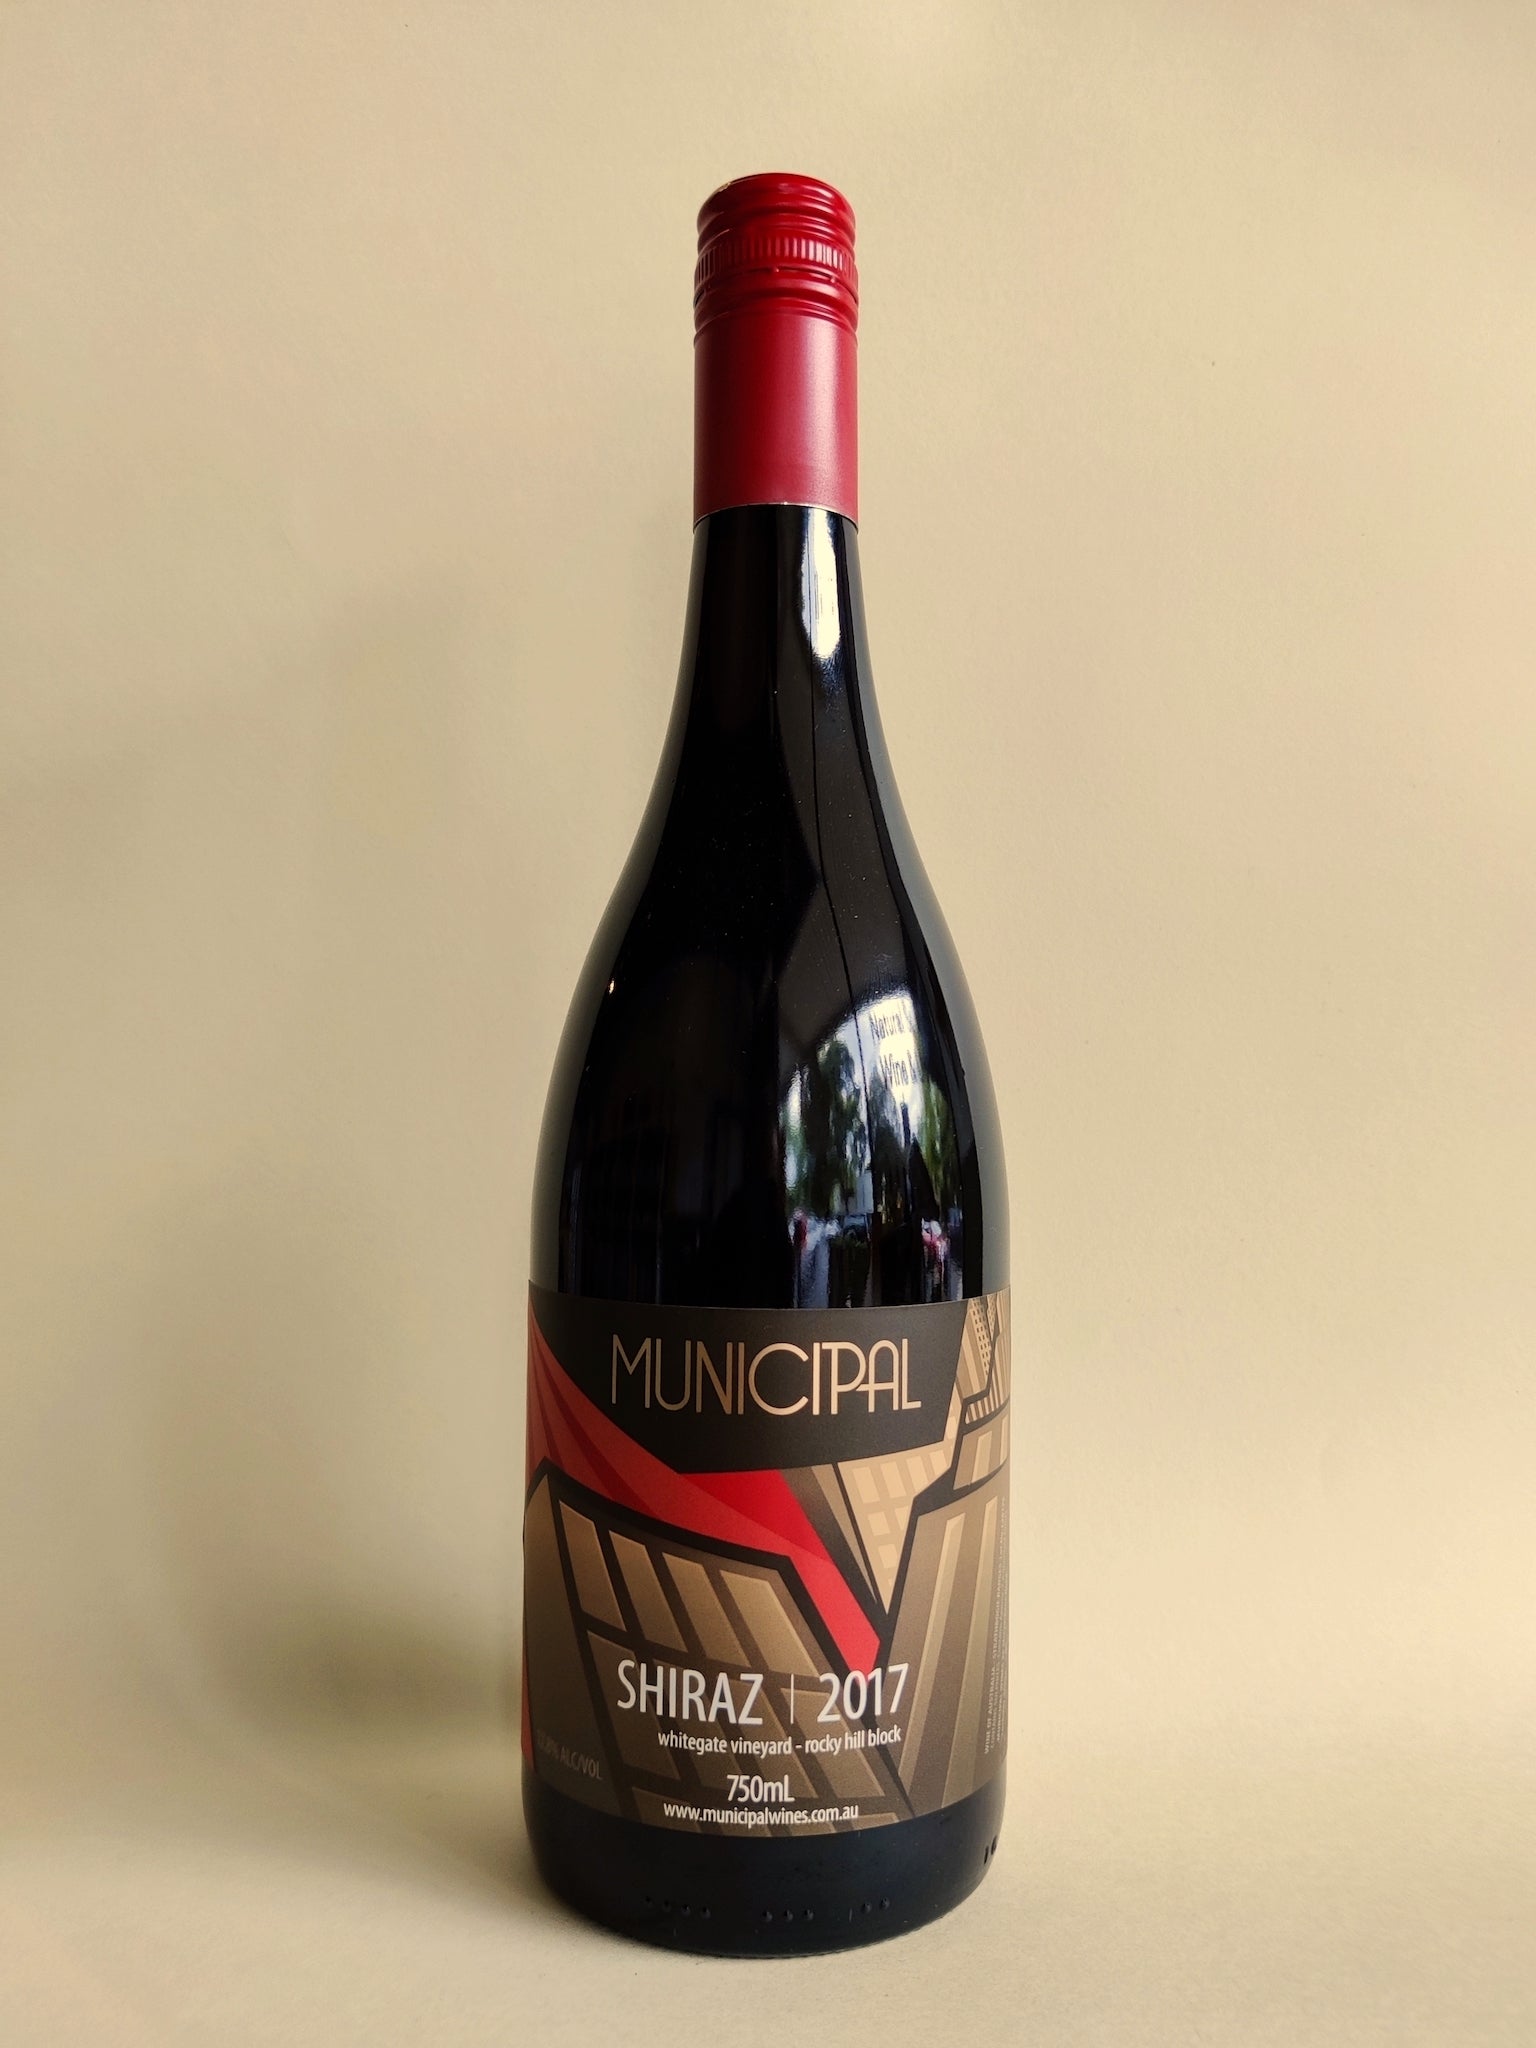 A bottle of 2017 Municipal Shiraz from Strathbogie Ranges, Victoria.